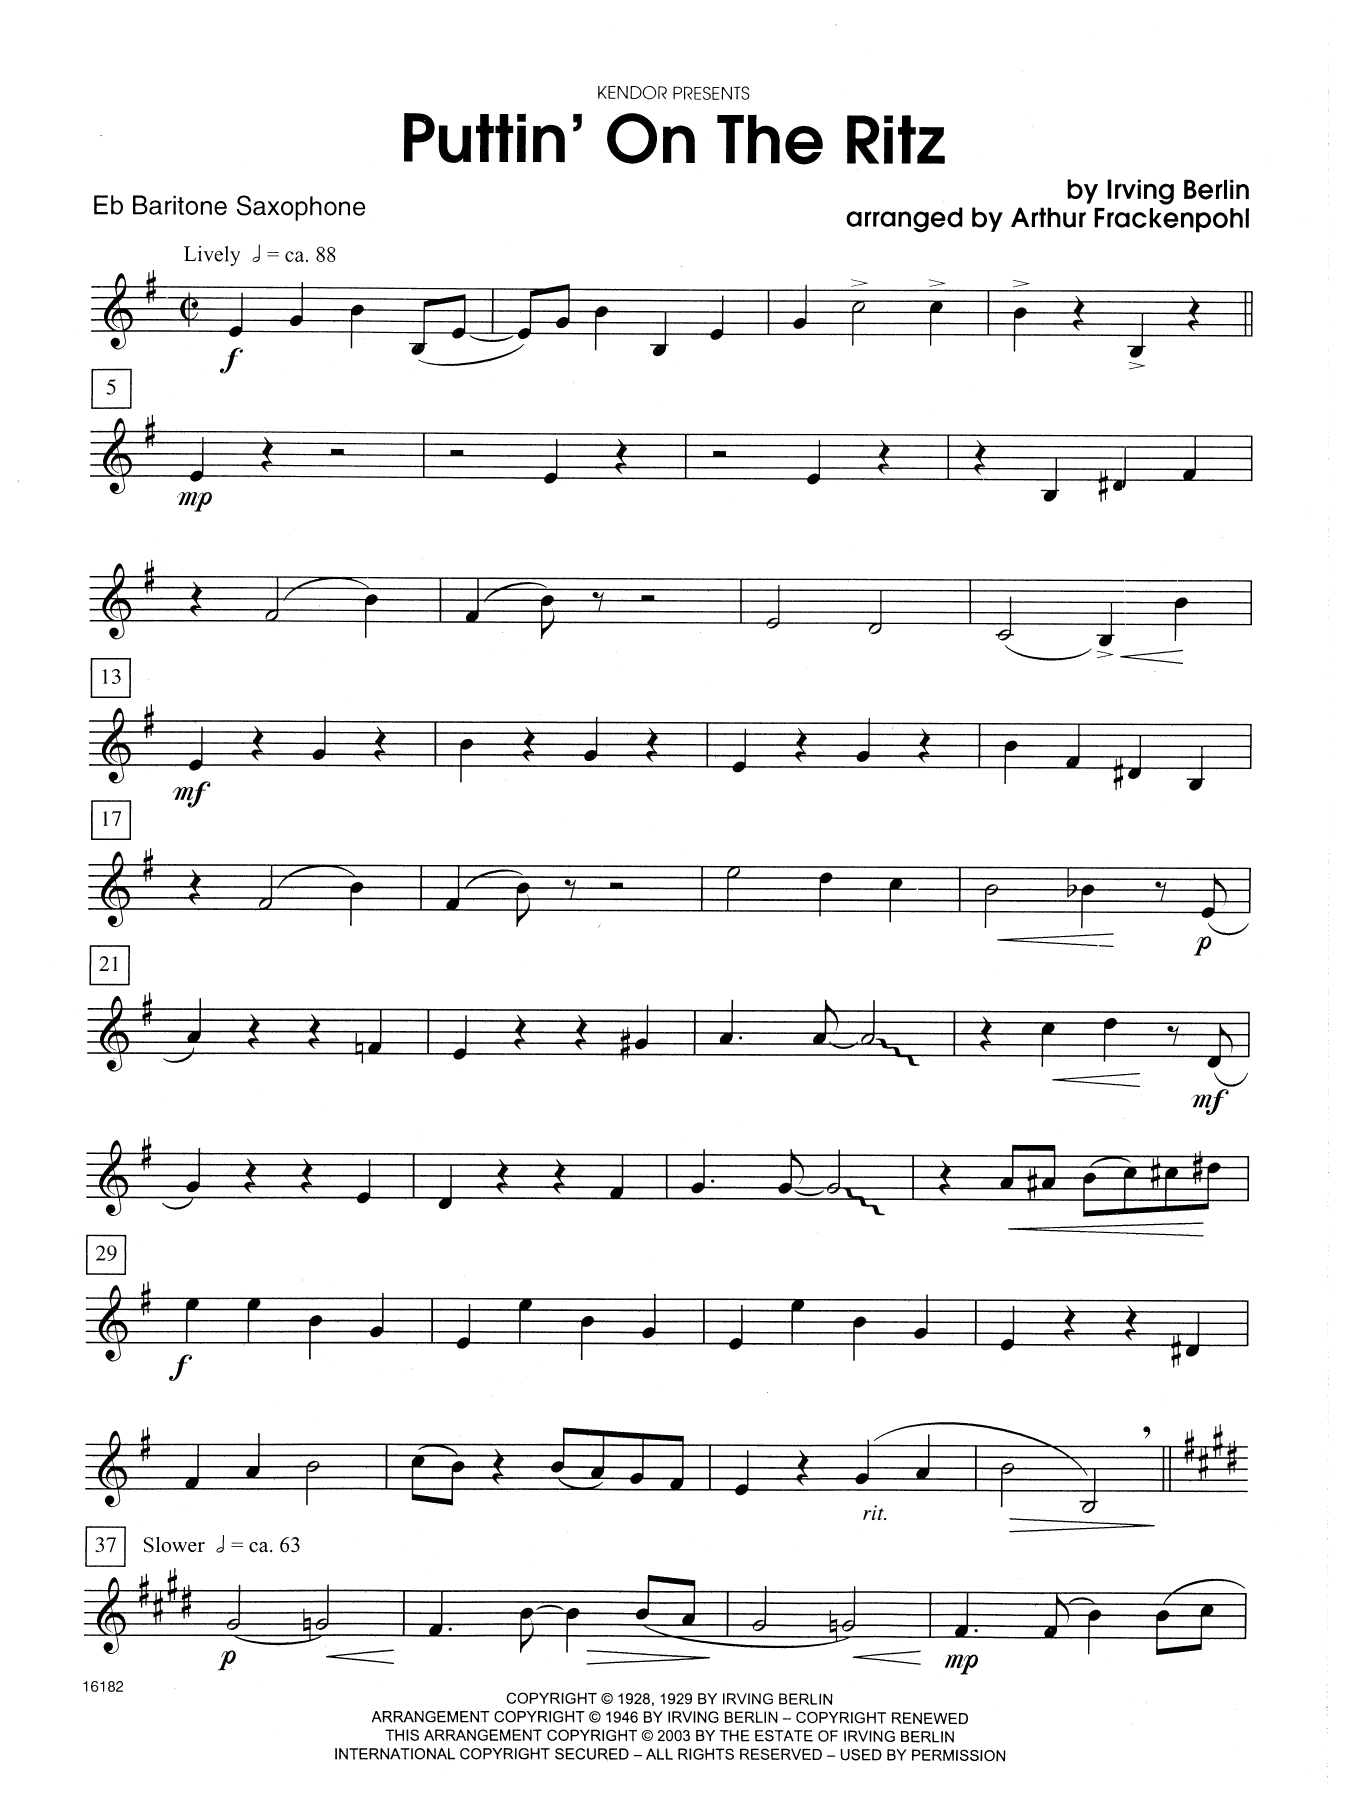 Download Arthur Frackenpohl Puttin' on the Ritz - Eb Baritone Saxop Sheet Music